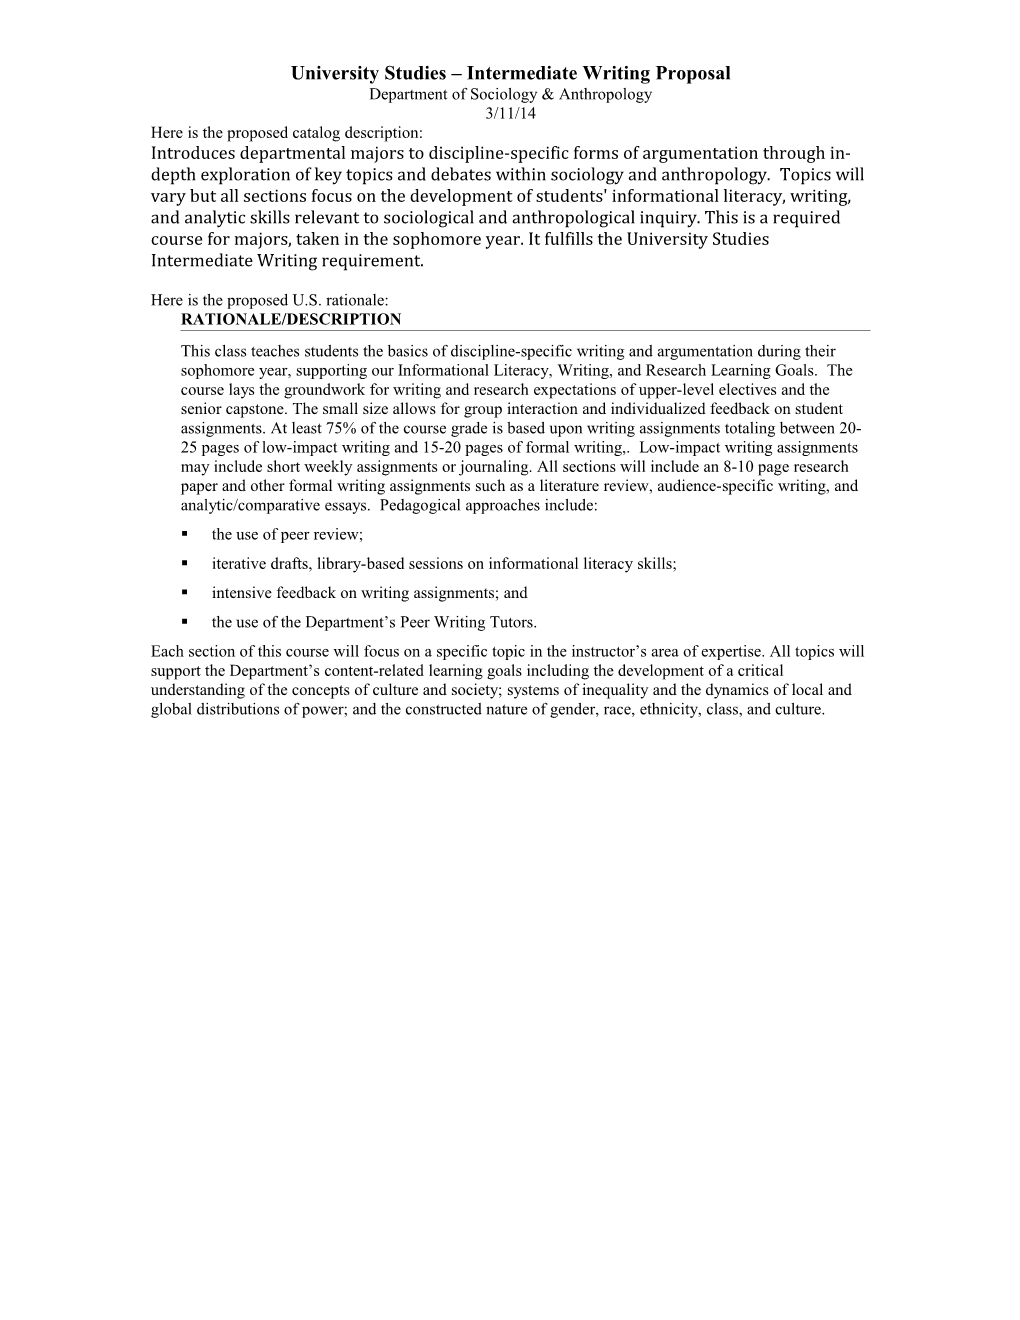 University Studies Intermediate Writing Proposal, Sociology/Anthropology Page 2